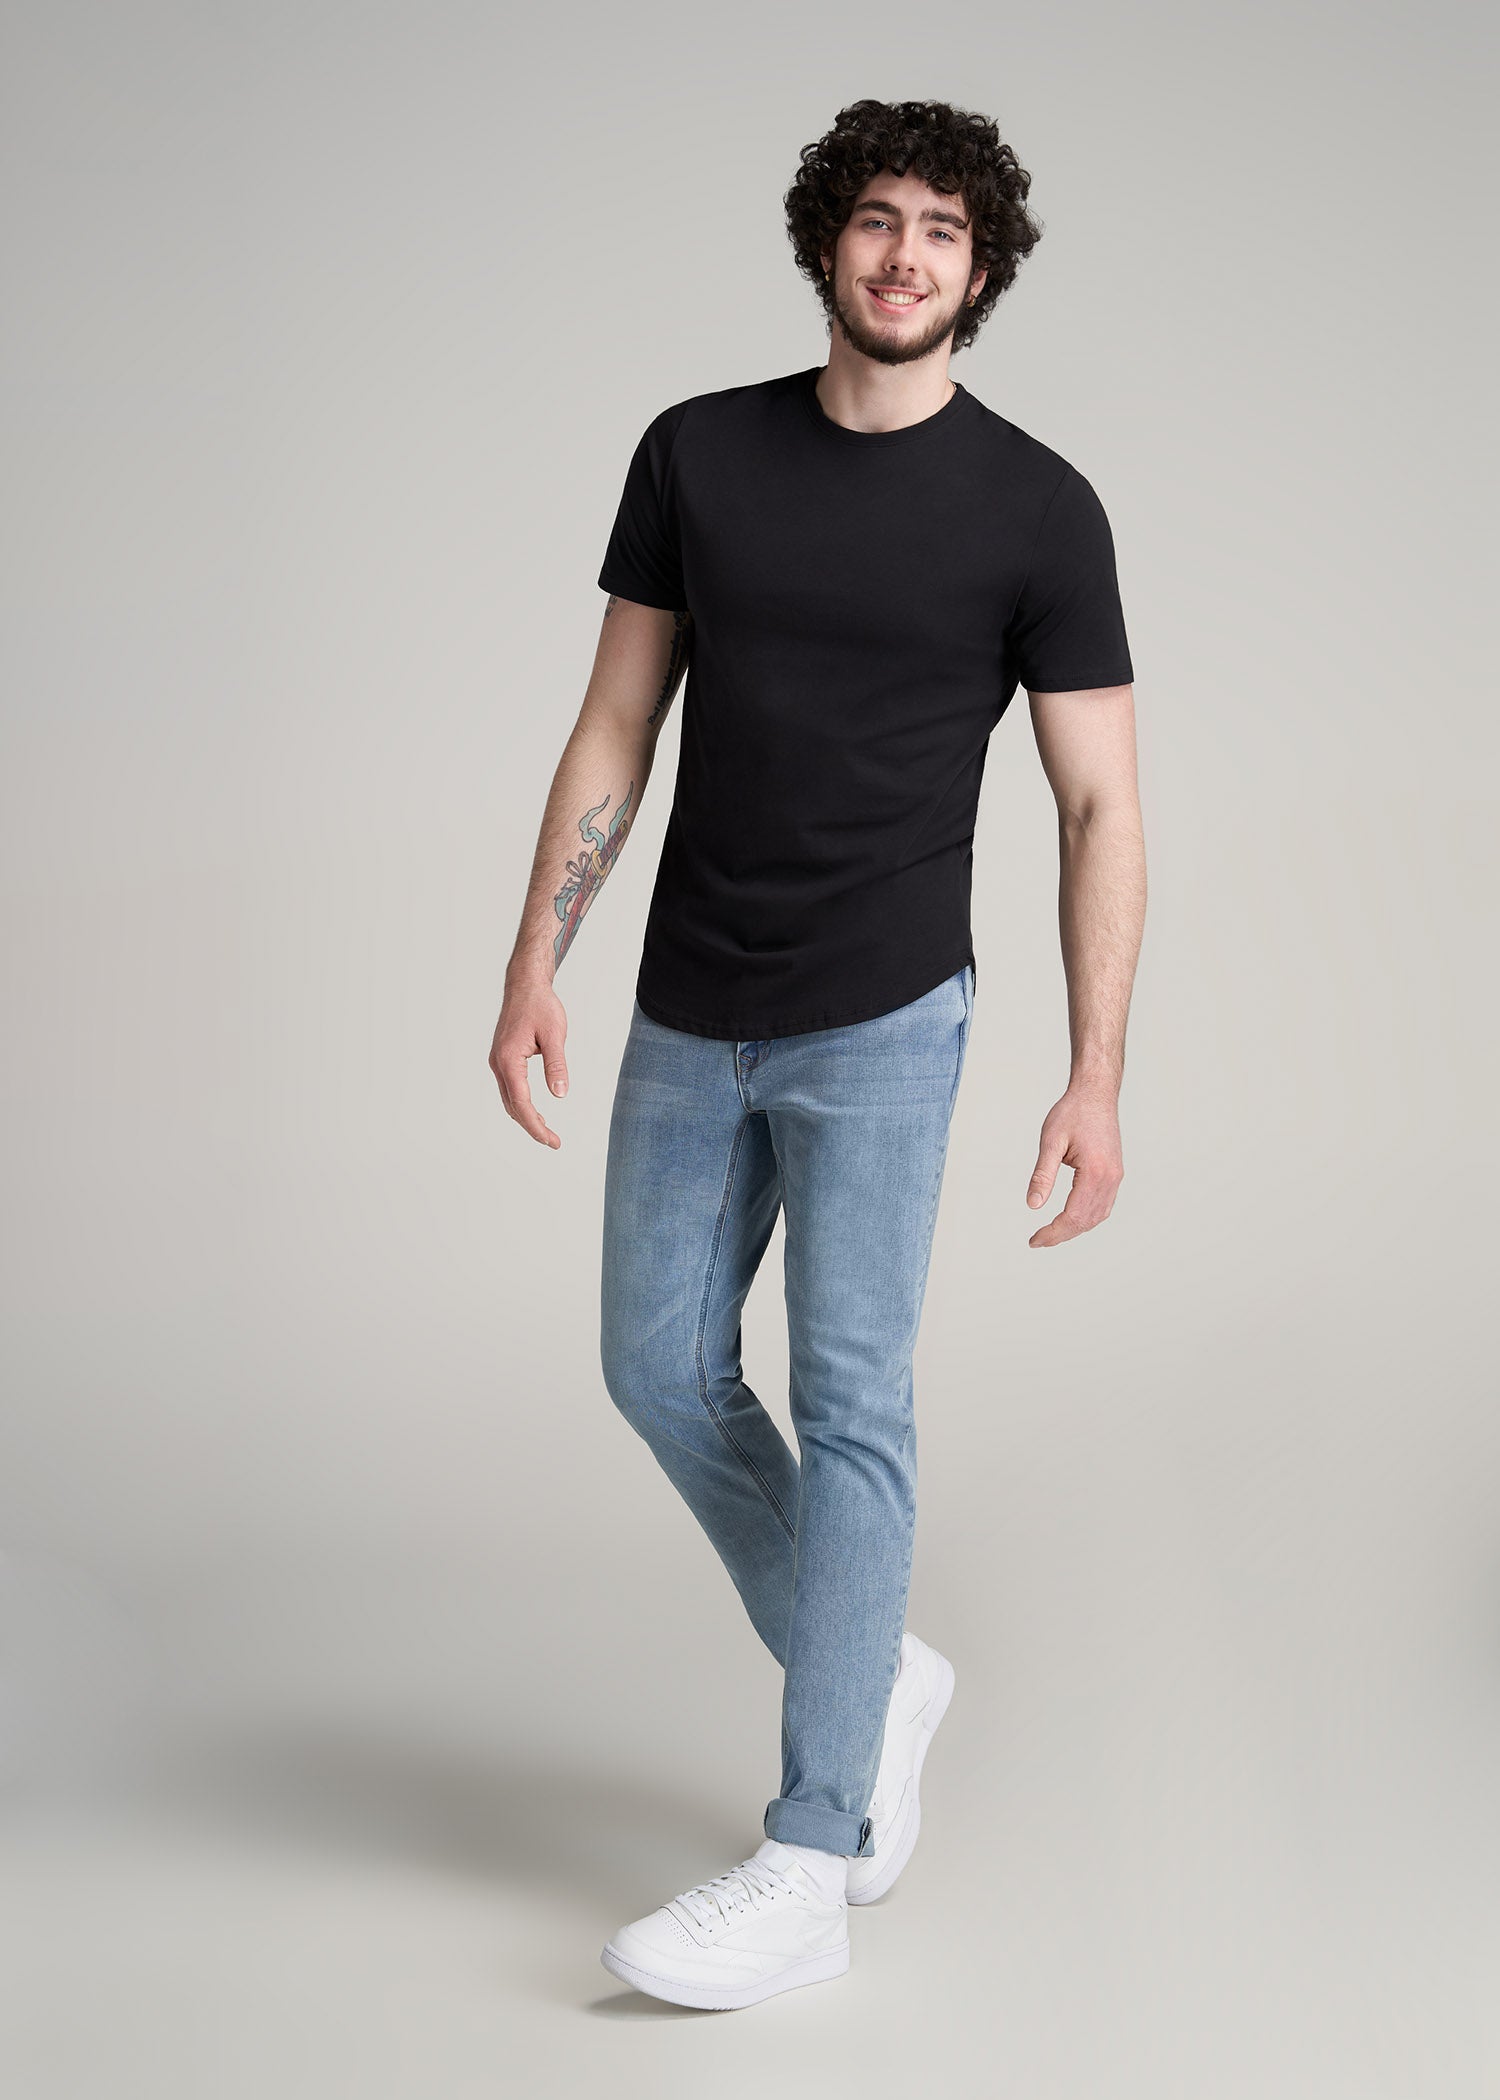 T-shirts Mens: Men's Tall Bottom Tees | American Tall